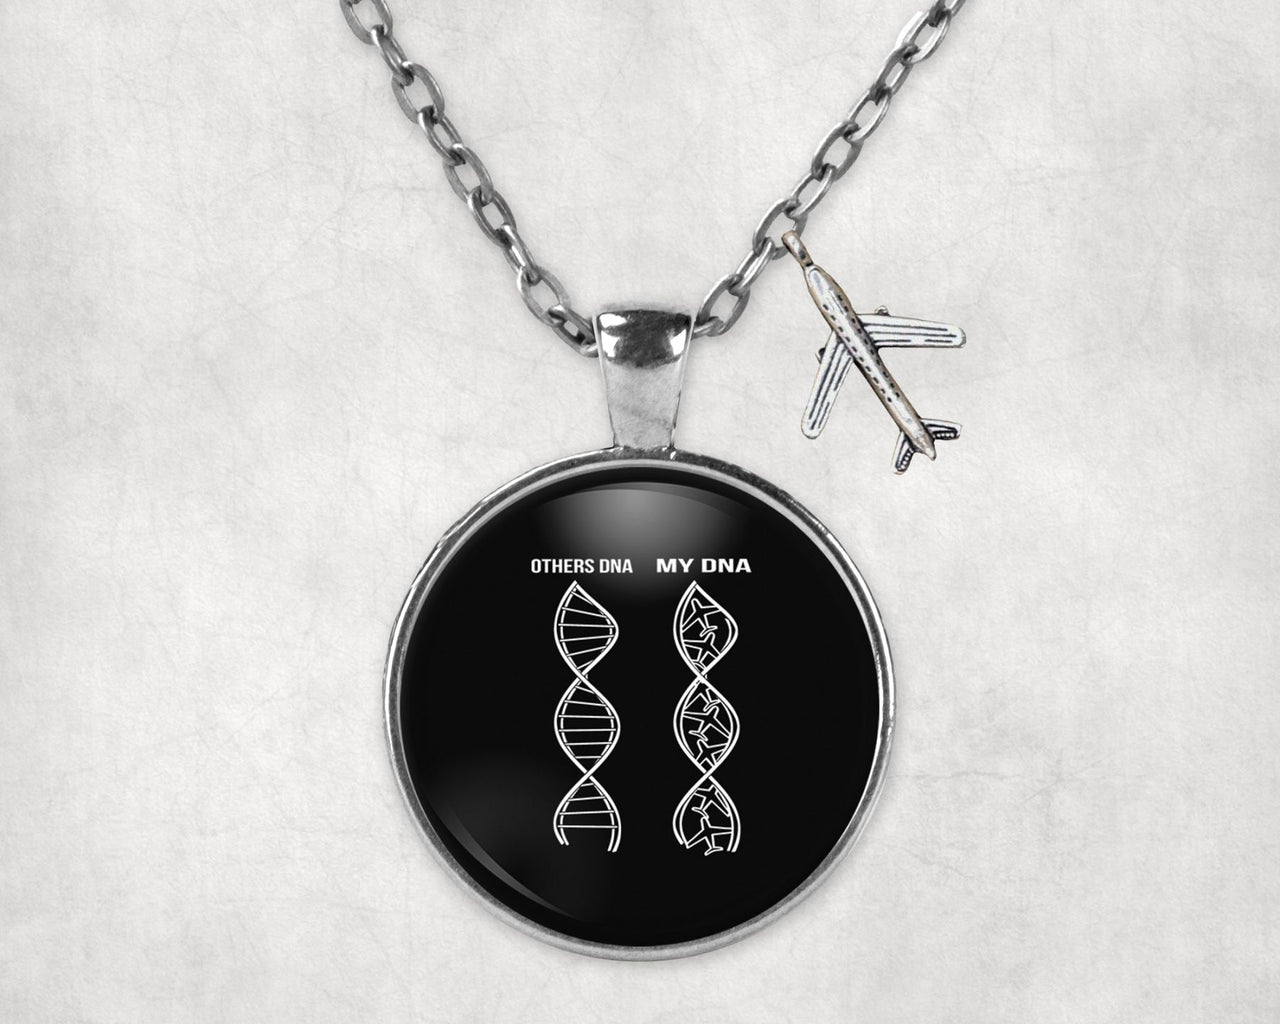 Aviation DNA Designed Necklaces